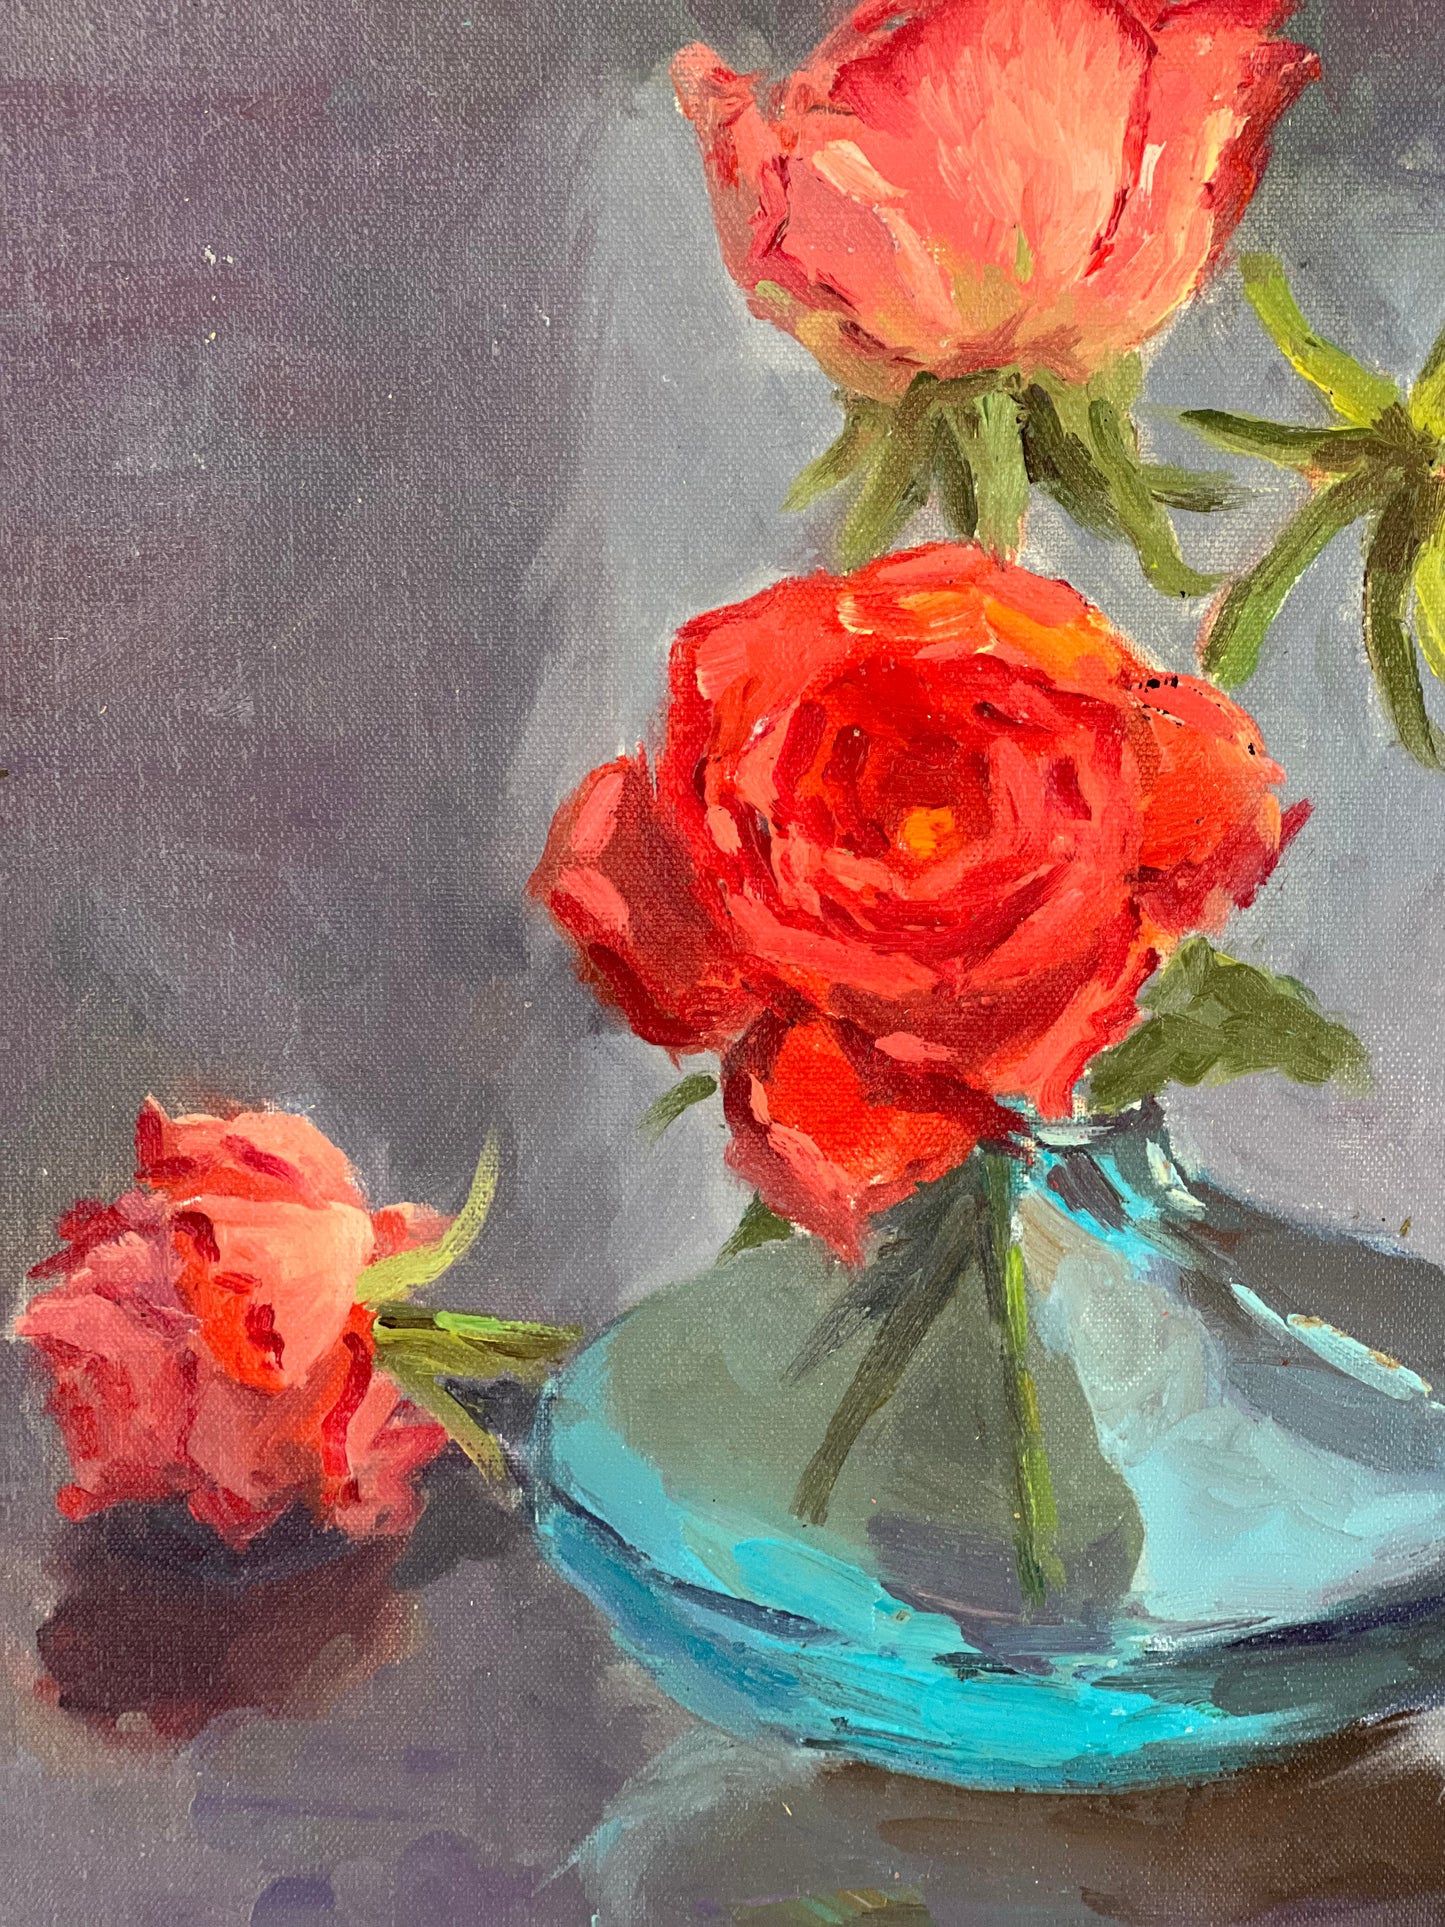 Roses in my garden - Original Oil Painting